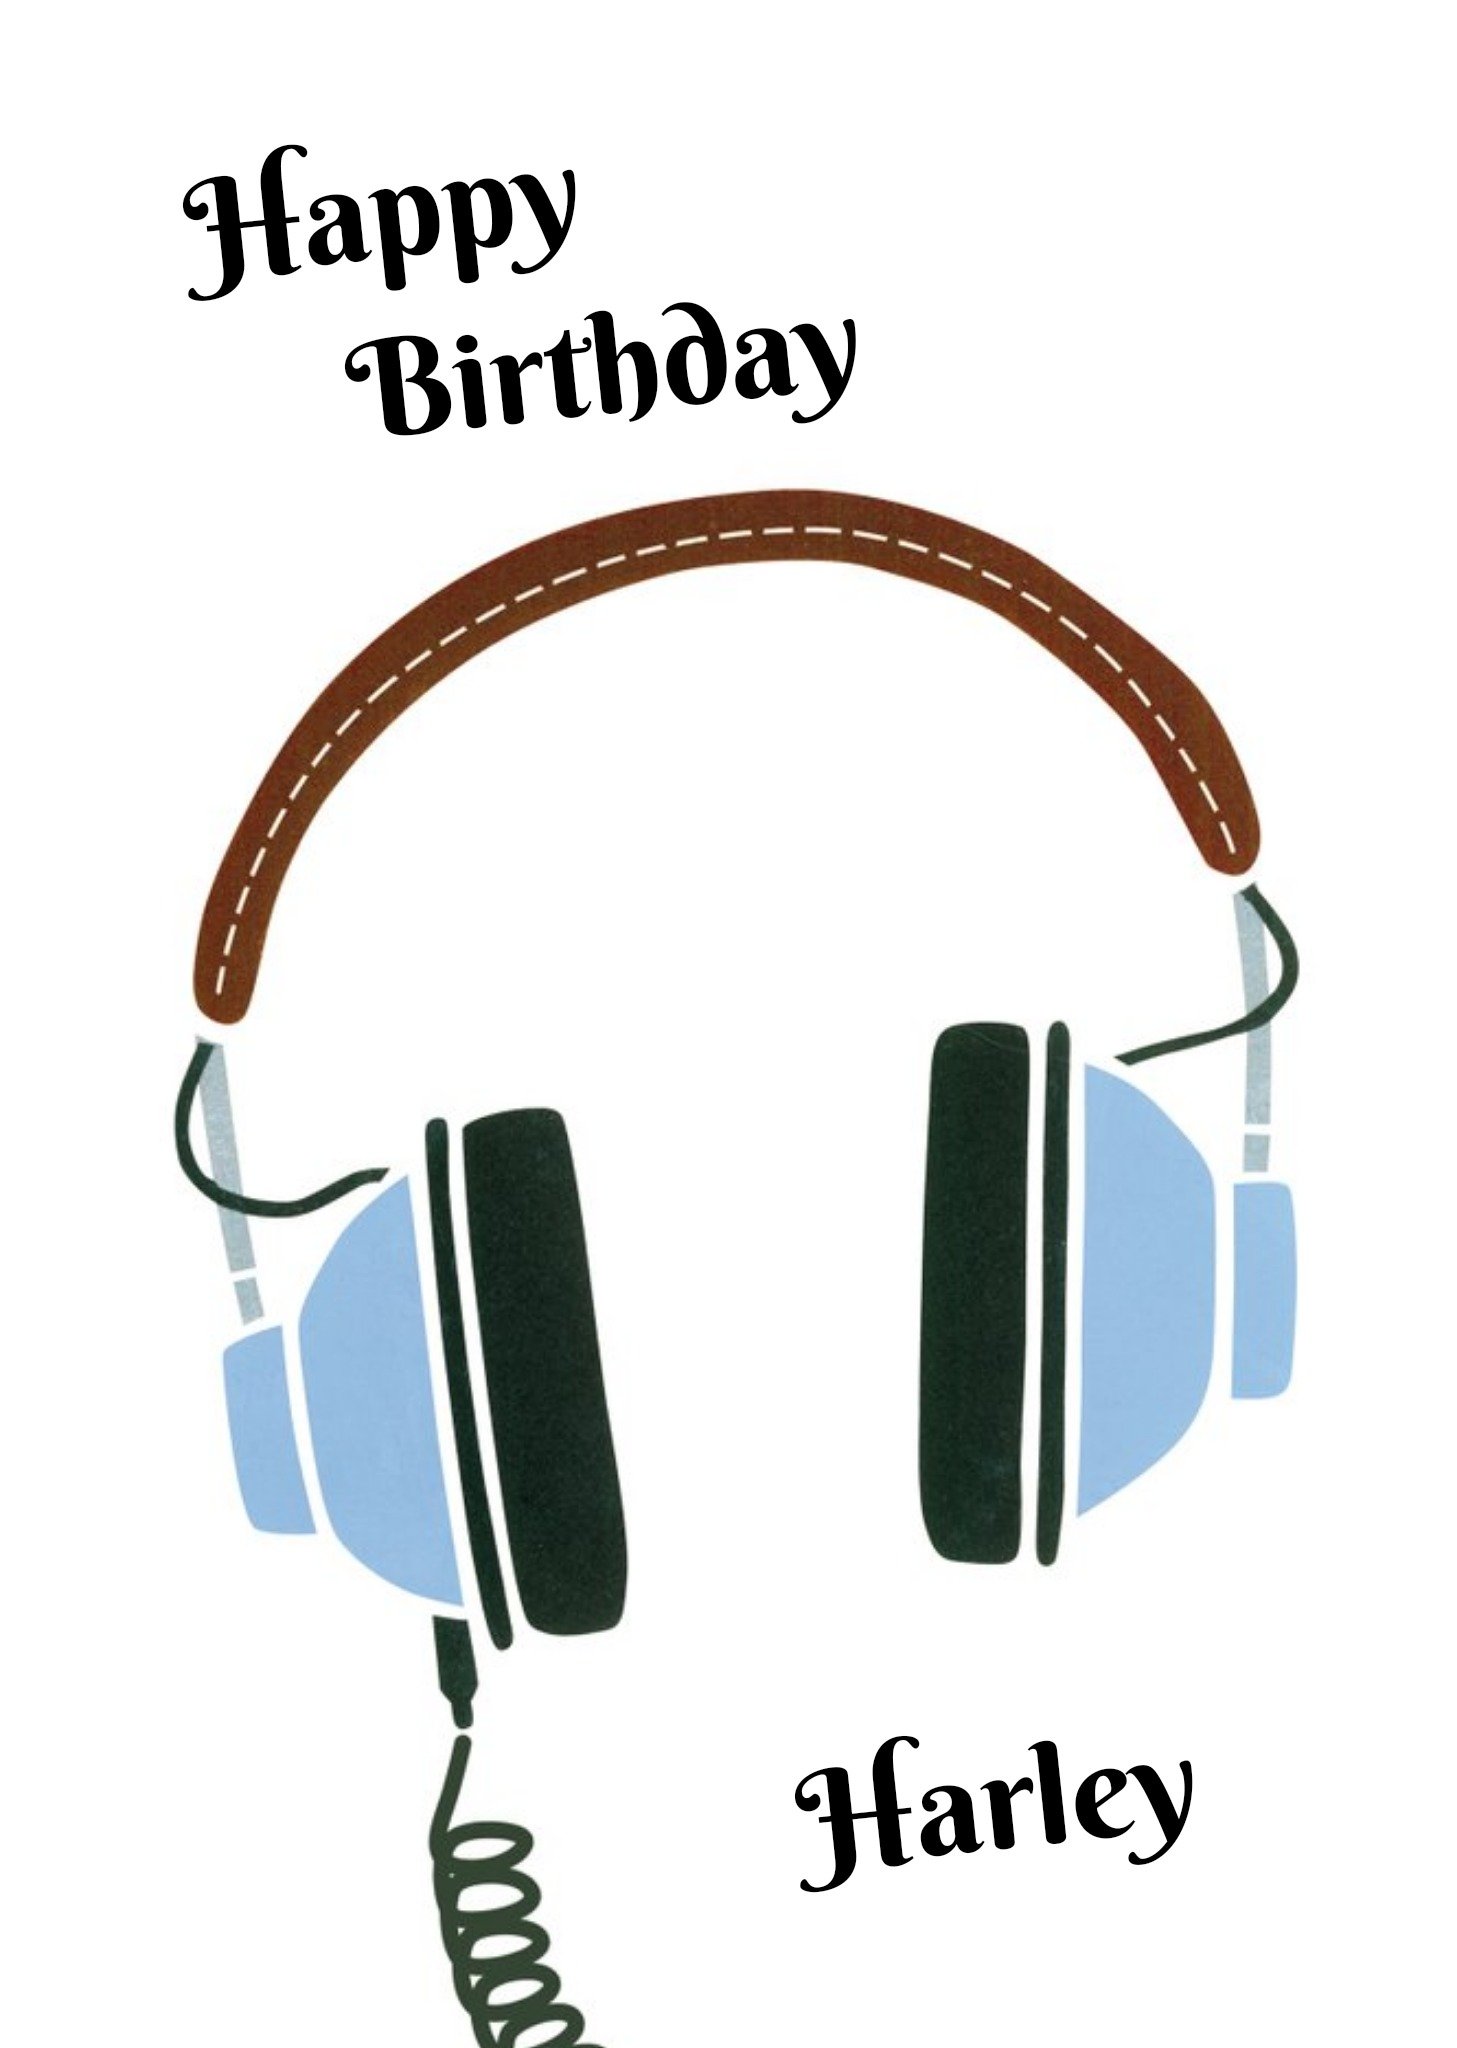 Moonpig Retro Headphones Personalised Happy Birthday Card, Large